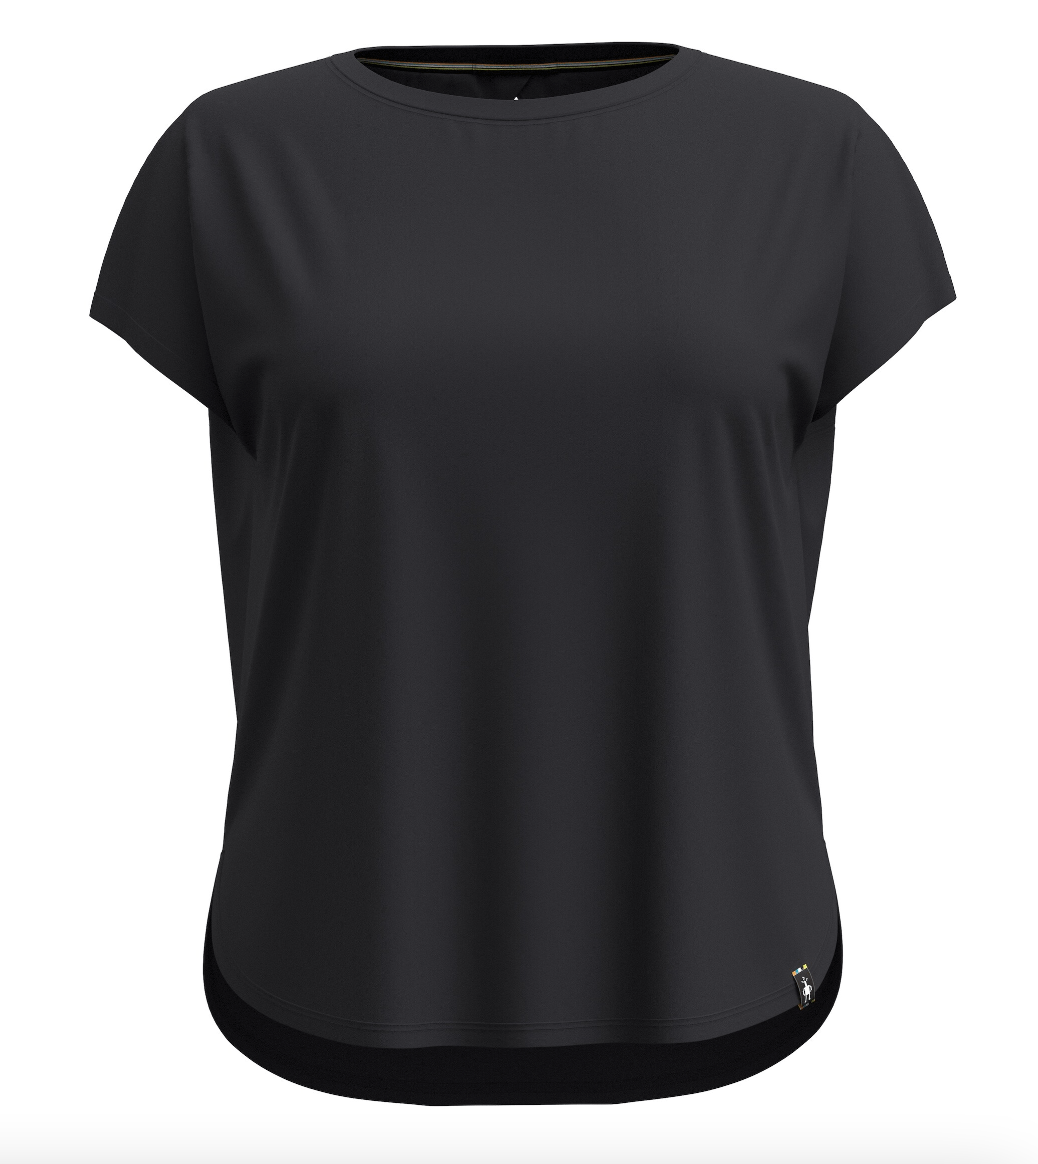 Smartwool T-Shirt S / Black Smartwool Women's Swing Short Sleeve T-Shirt